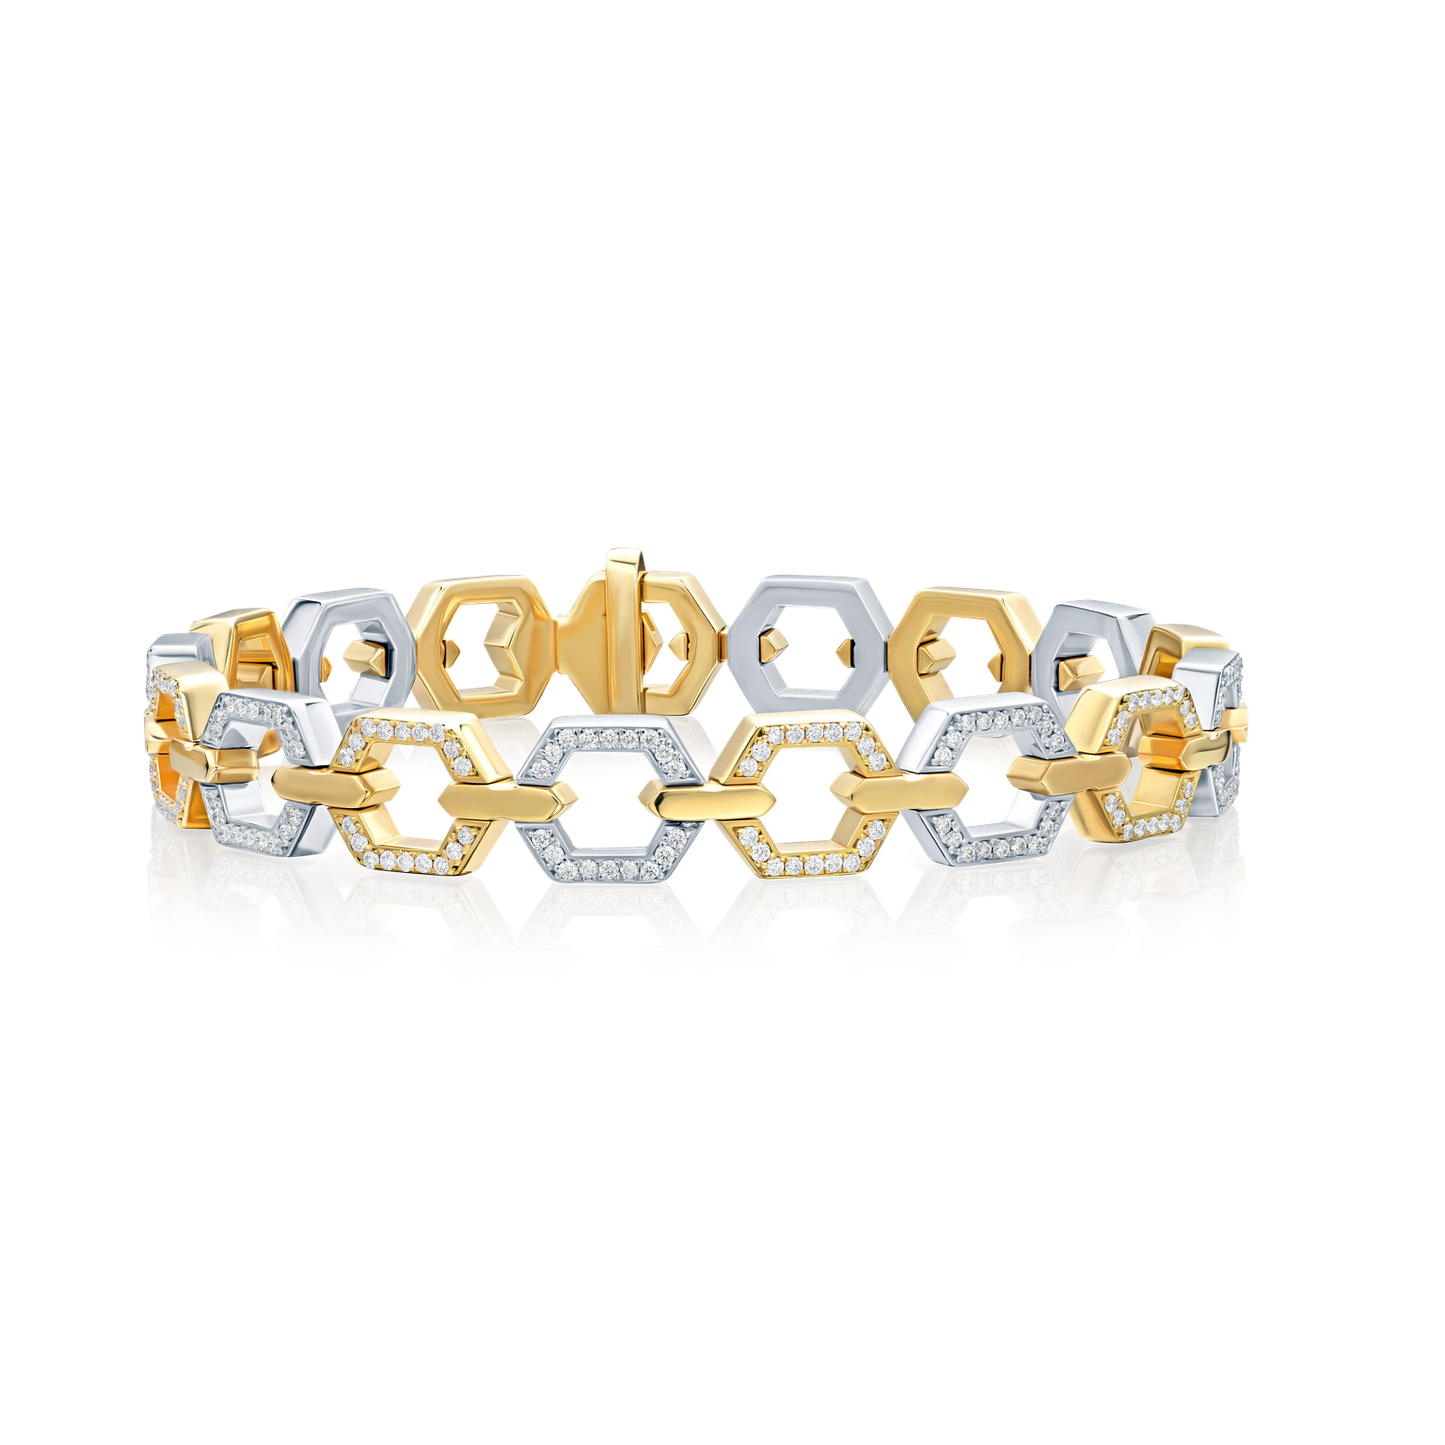 18ct Yellow Gold and Platinum Diamond Bracelet